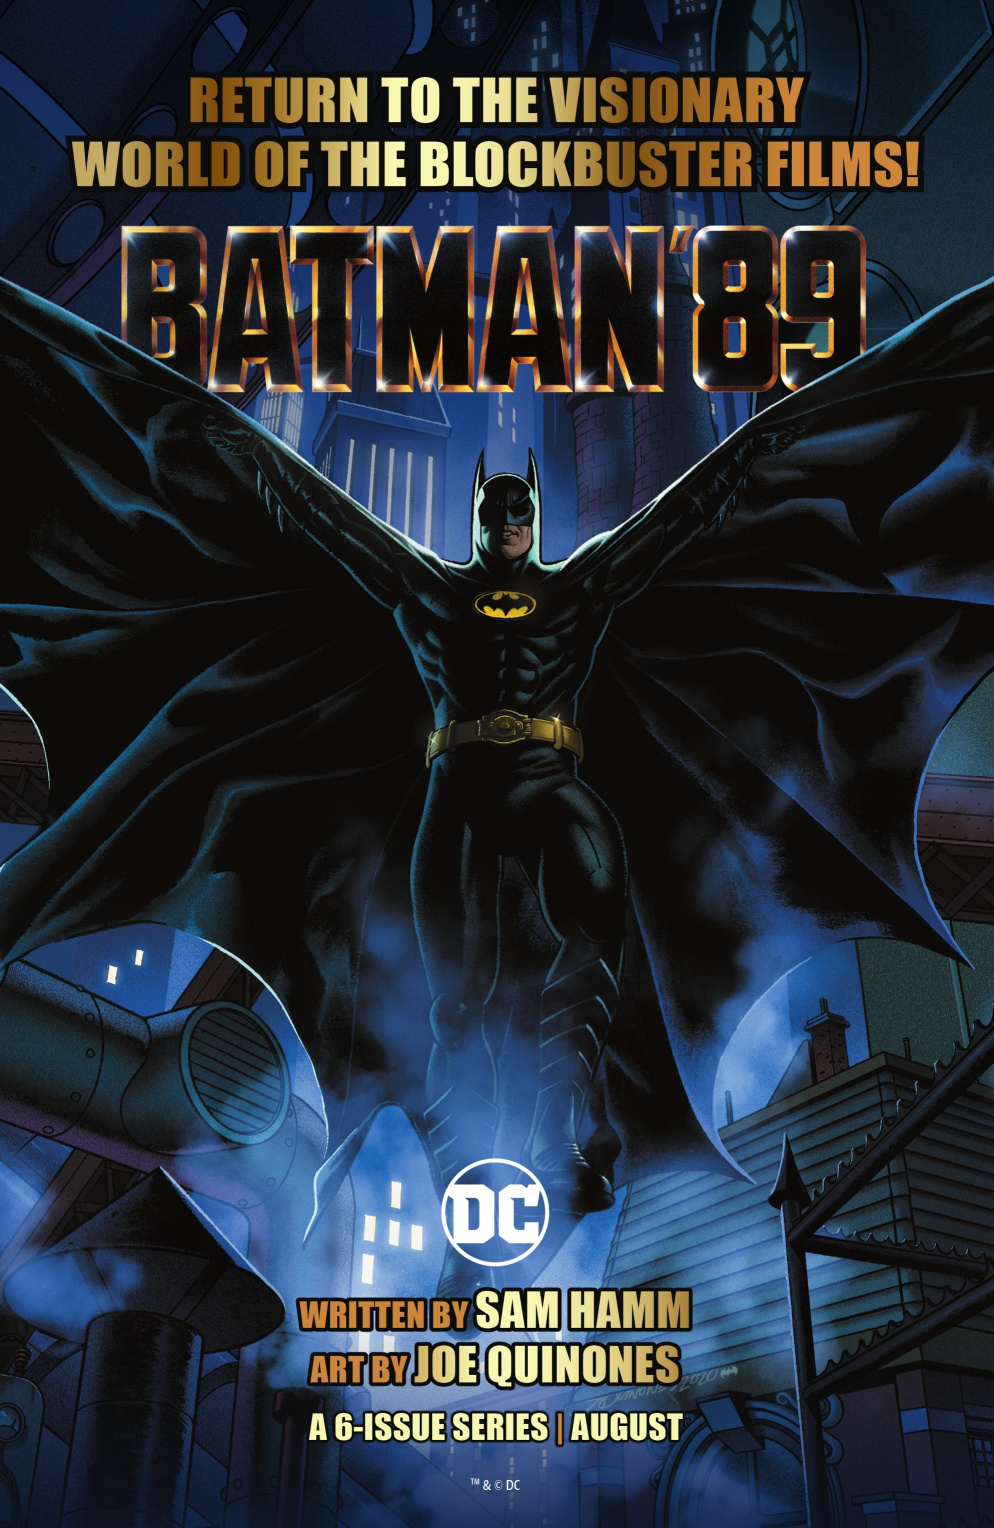 1989 batman Batman '89